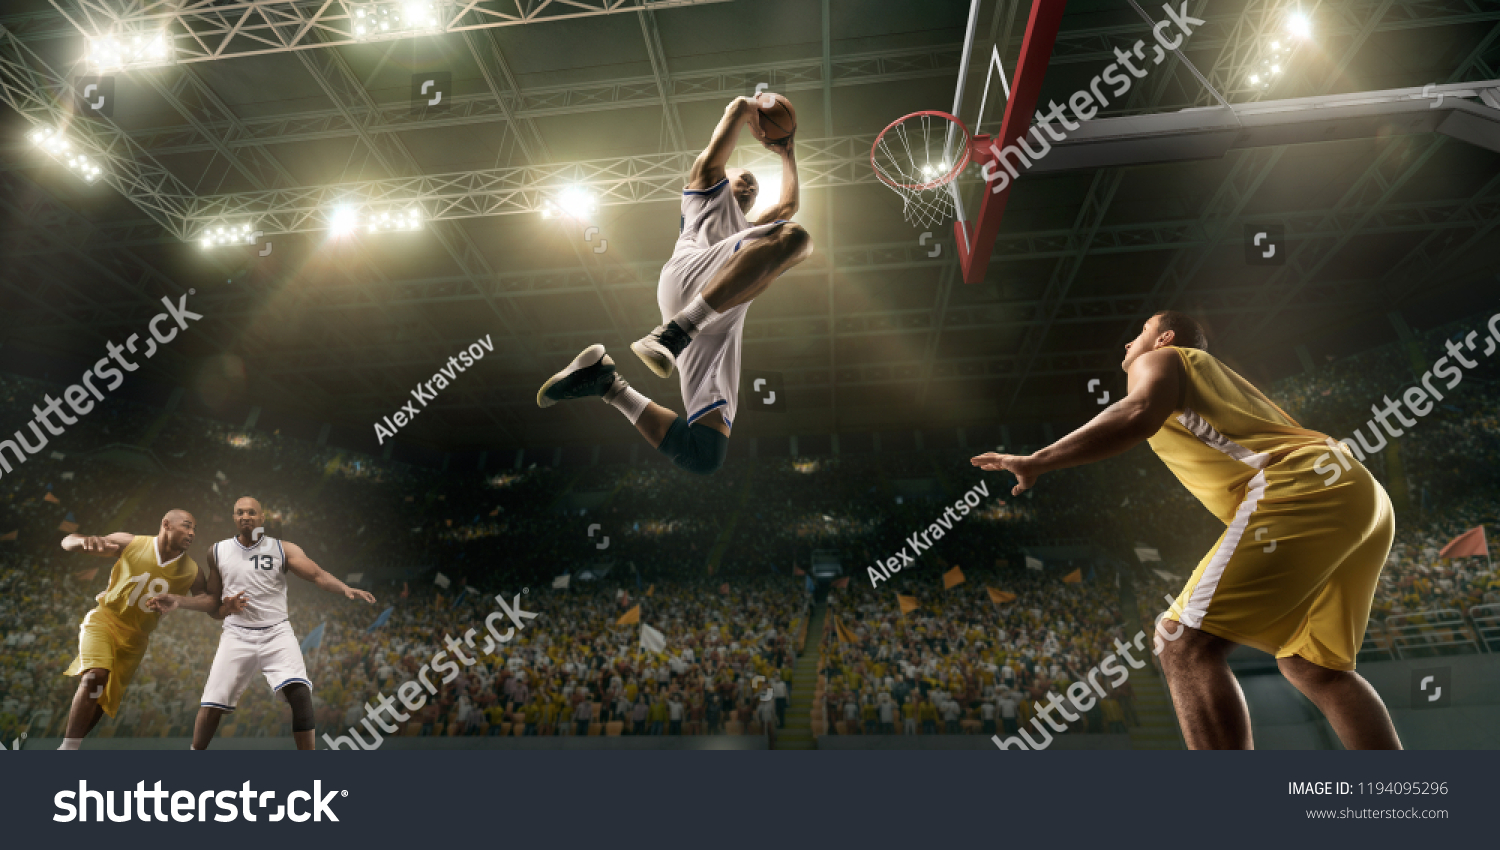 Basketball players on big professional arena during the game. Basketball player makes slum dunk #1194095296